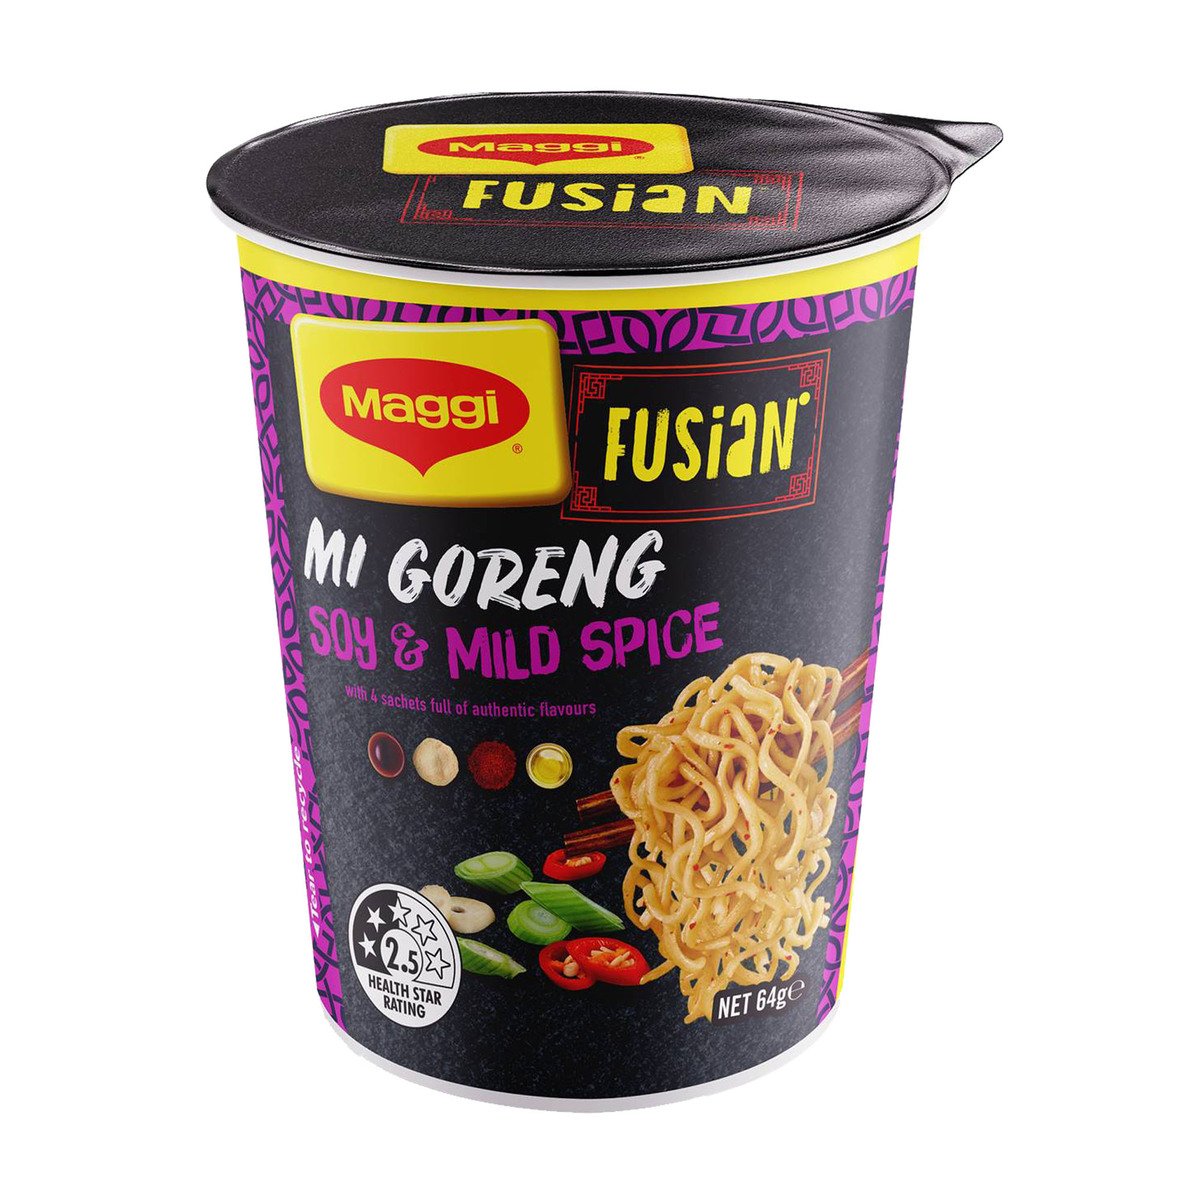 Maggi Fusian Cup Noodles Mi Goreng Soy & Mild Spice 64g